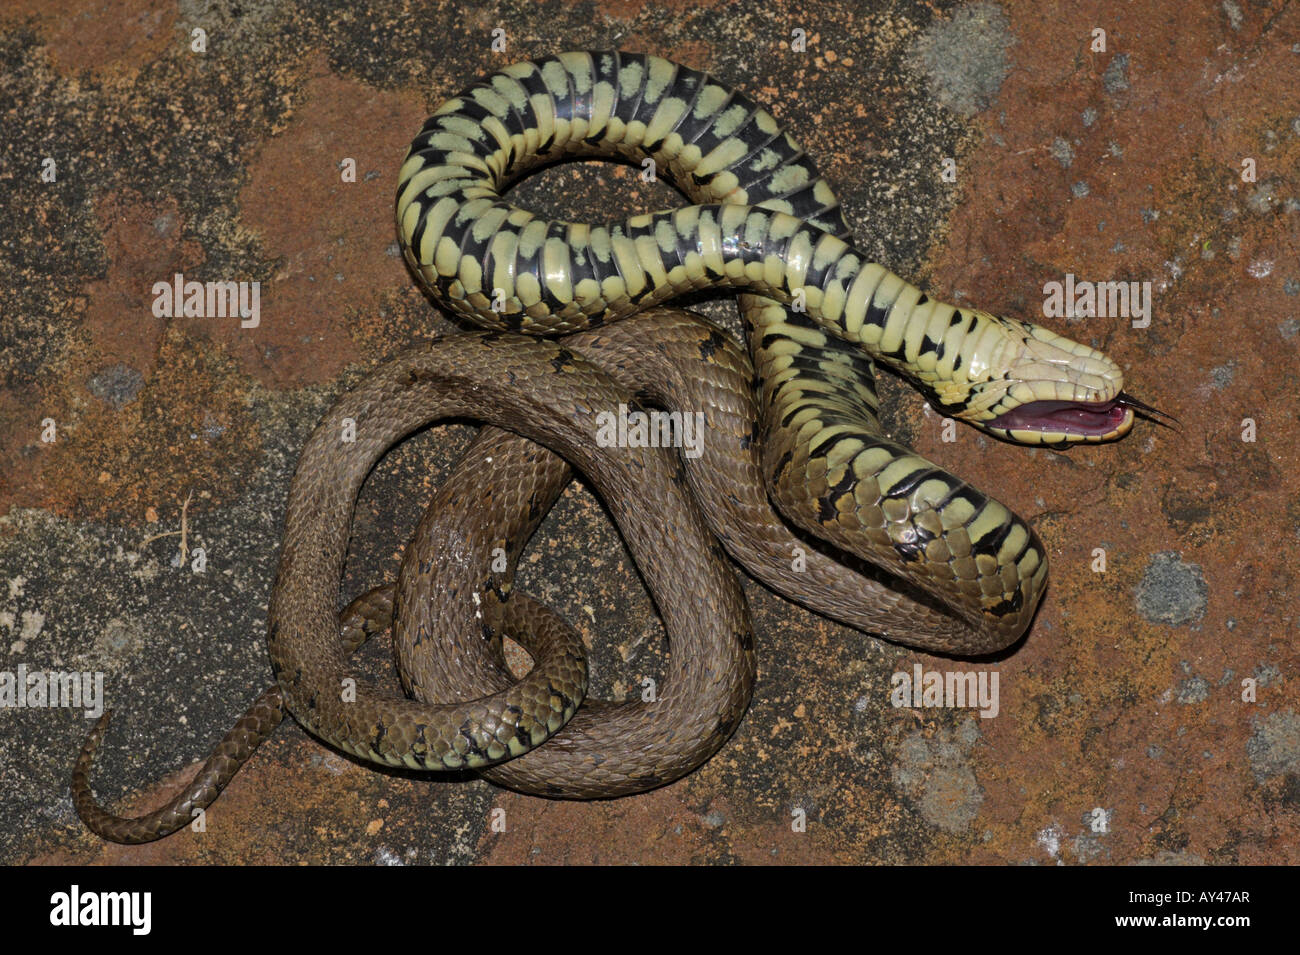 Hognose snake playing dead GLOSSY PHOTO PRINT 3100